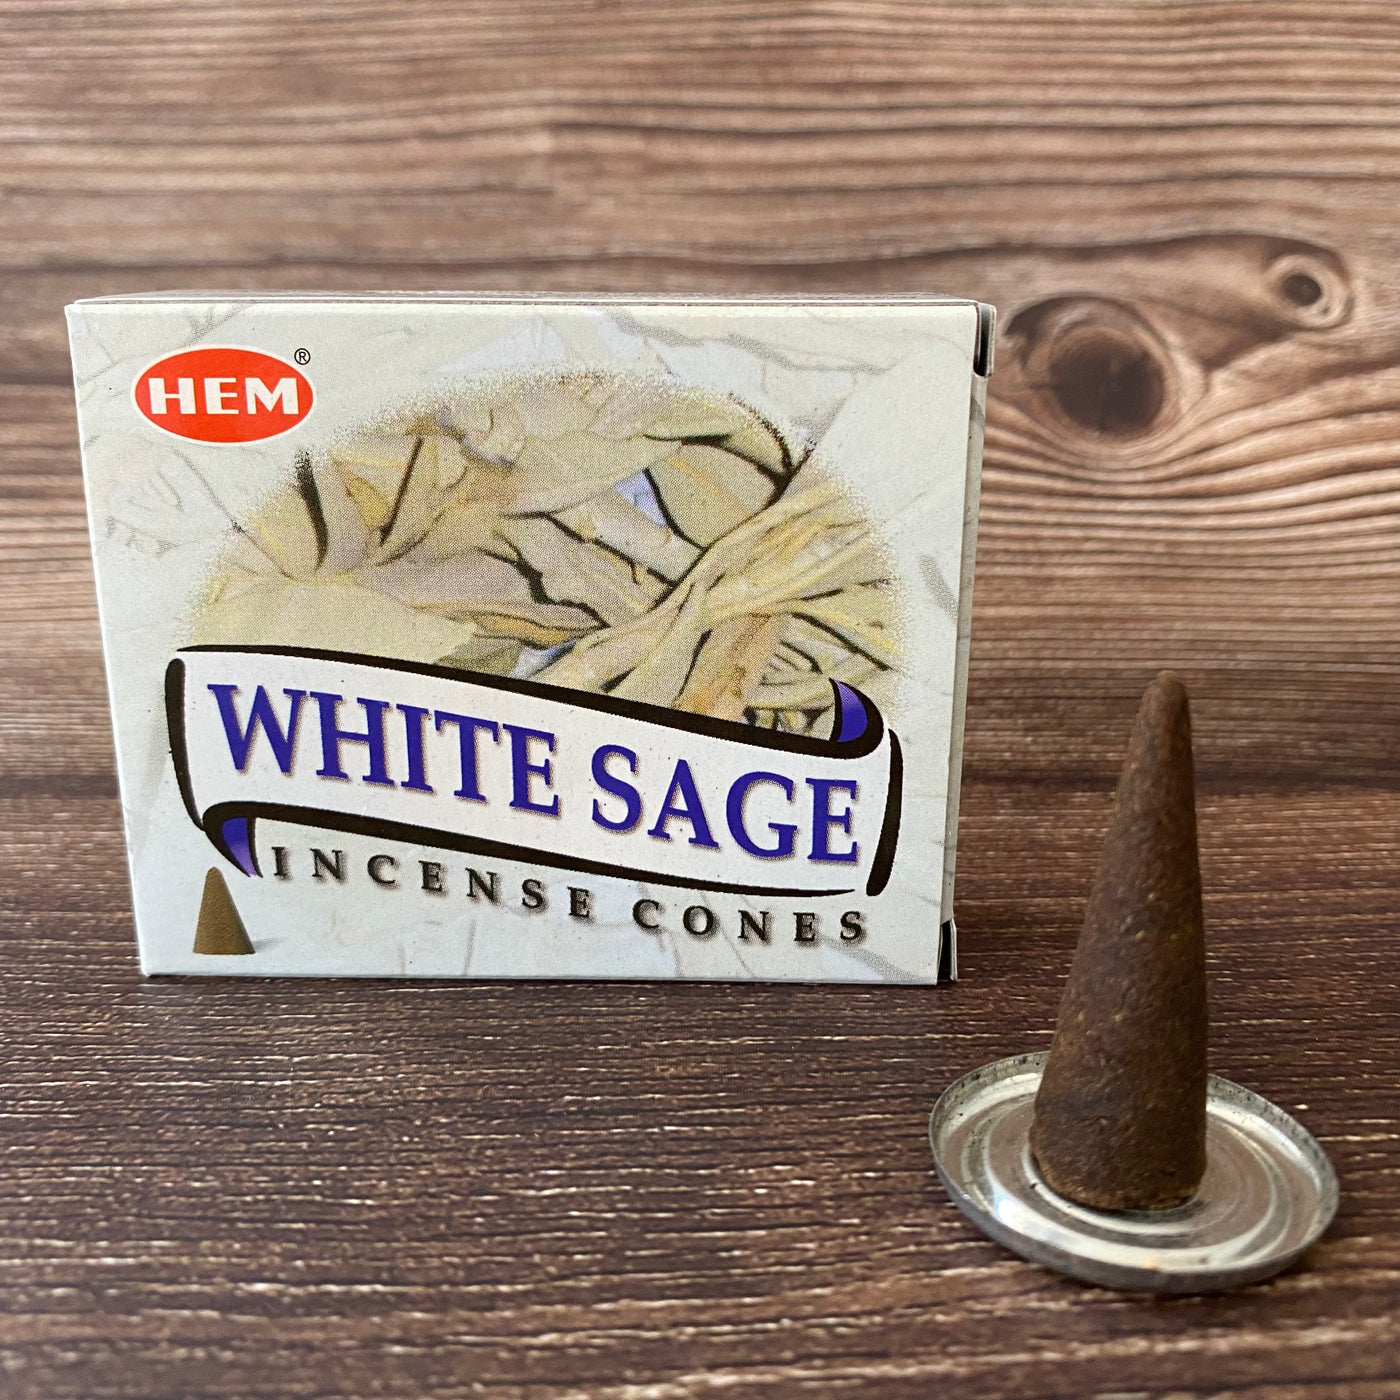 HEM - White Sage Cone Incense (10 pack)